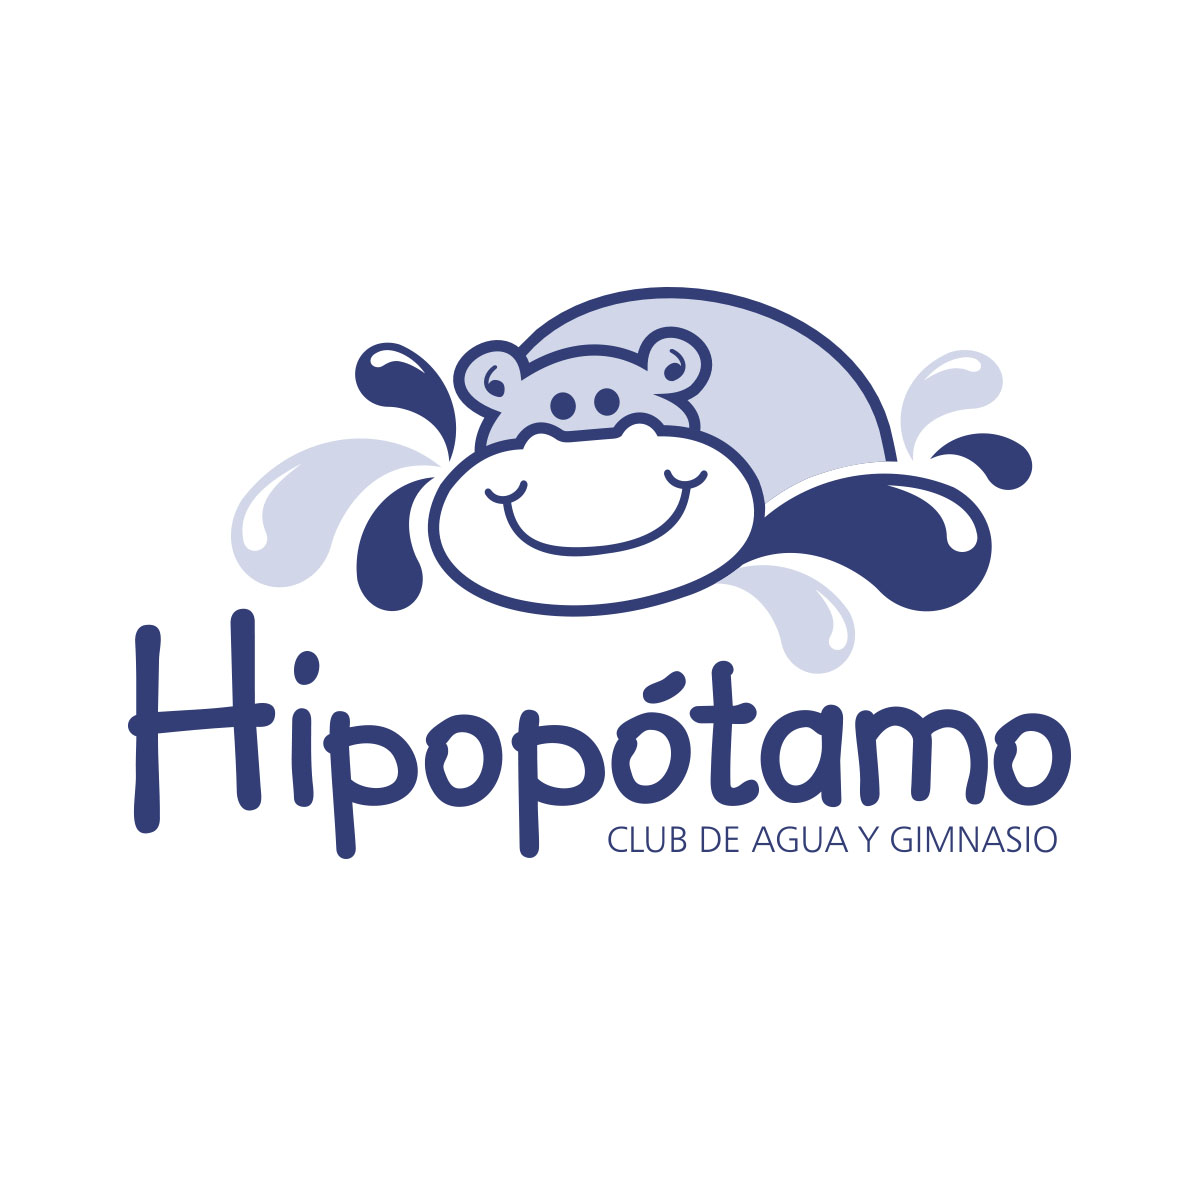 2002 hipopotamo